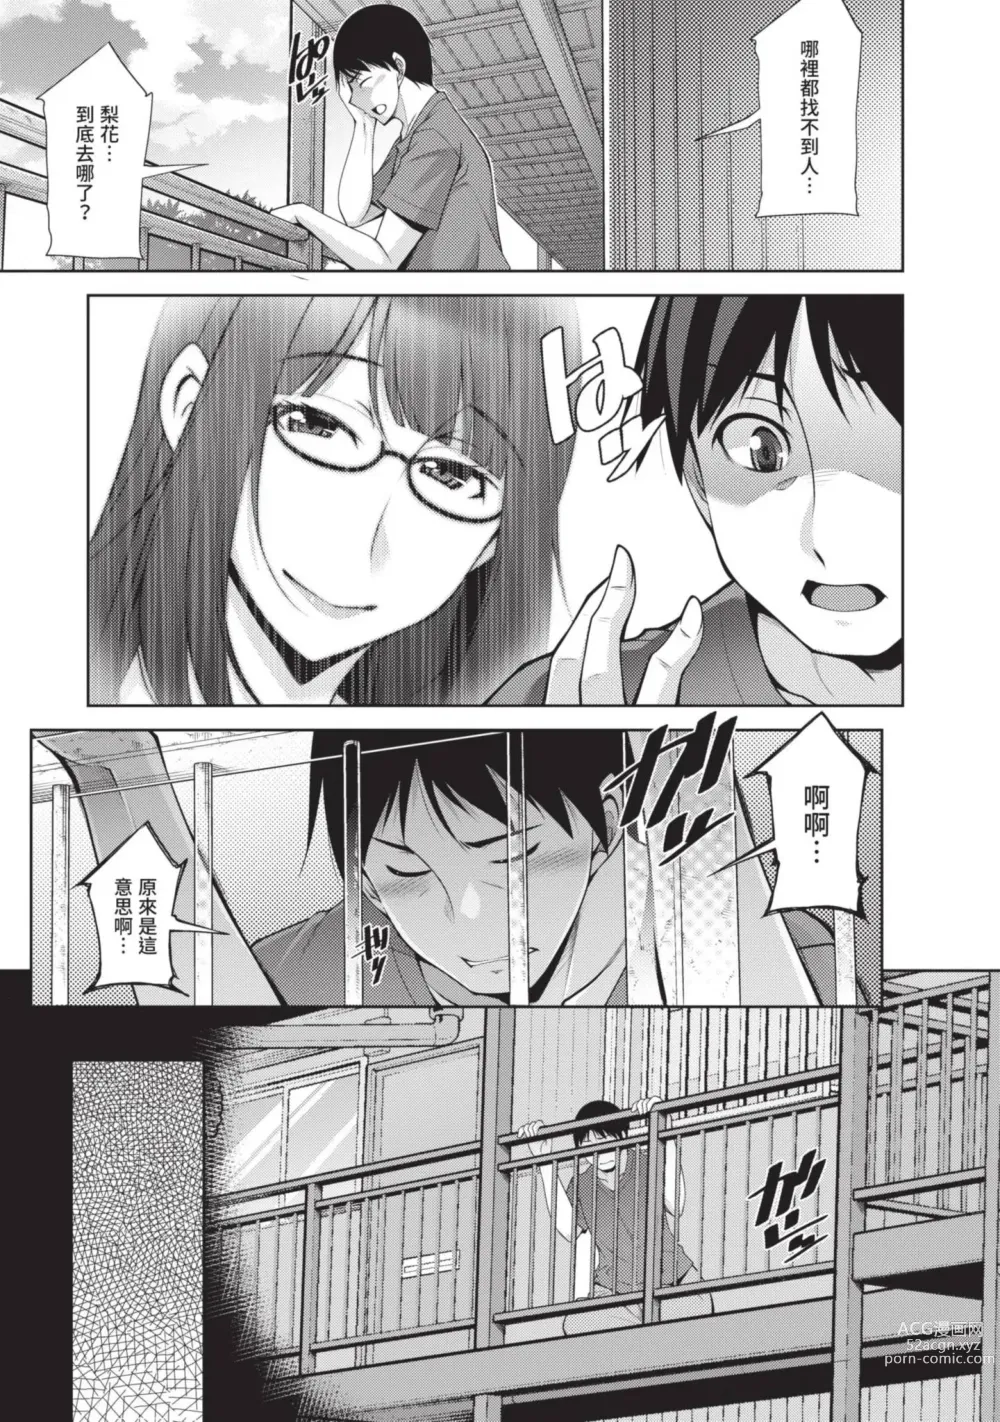 Page 161 of manga 眼鏡美女總是冷淡對應我